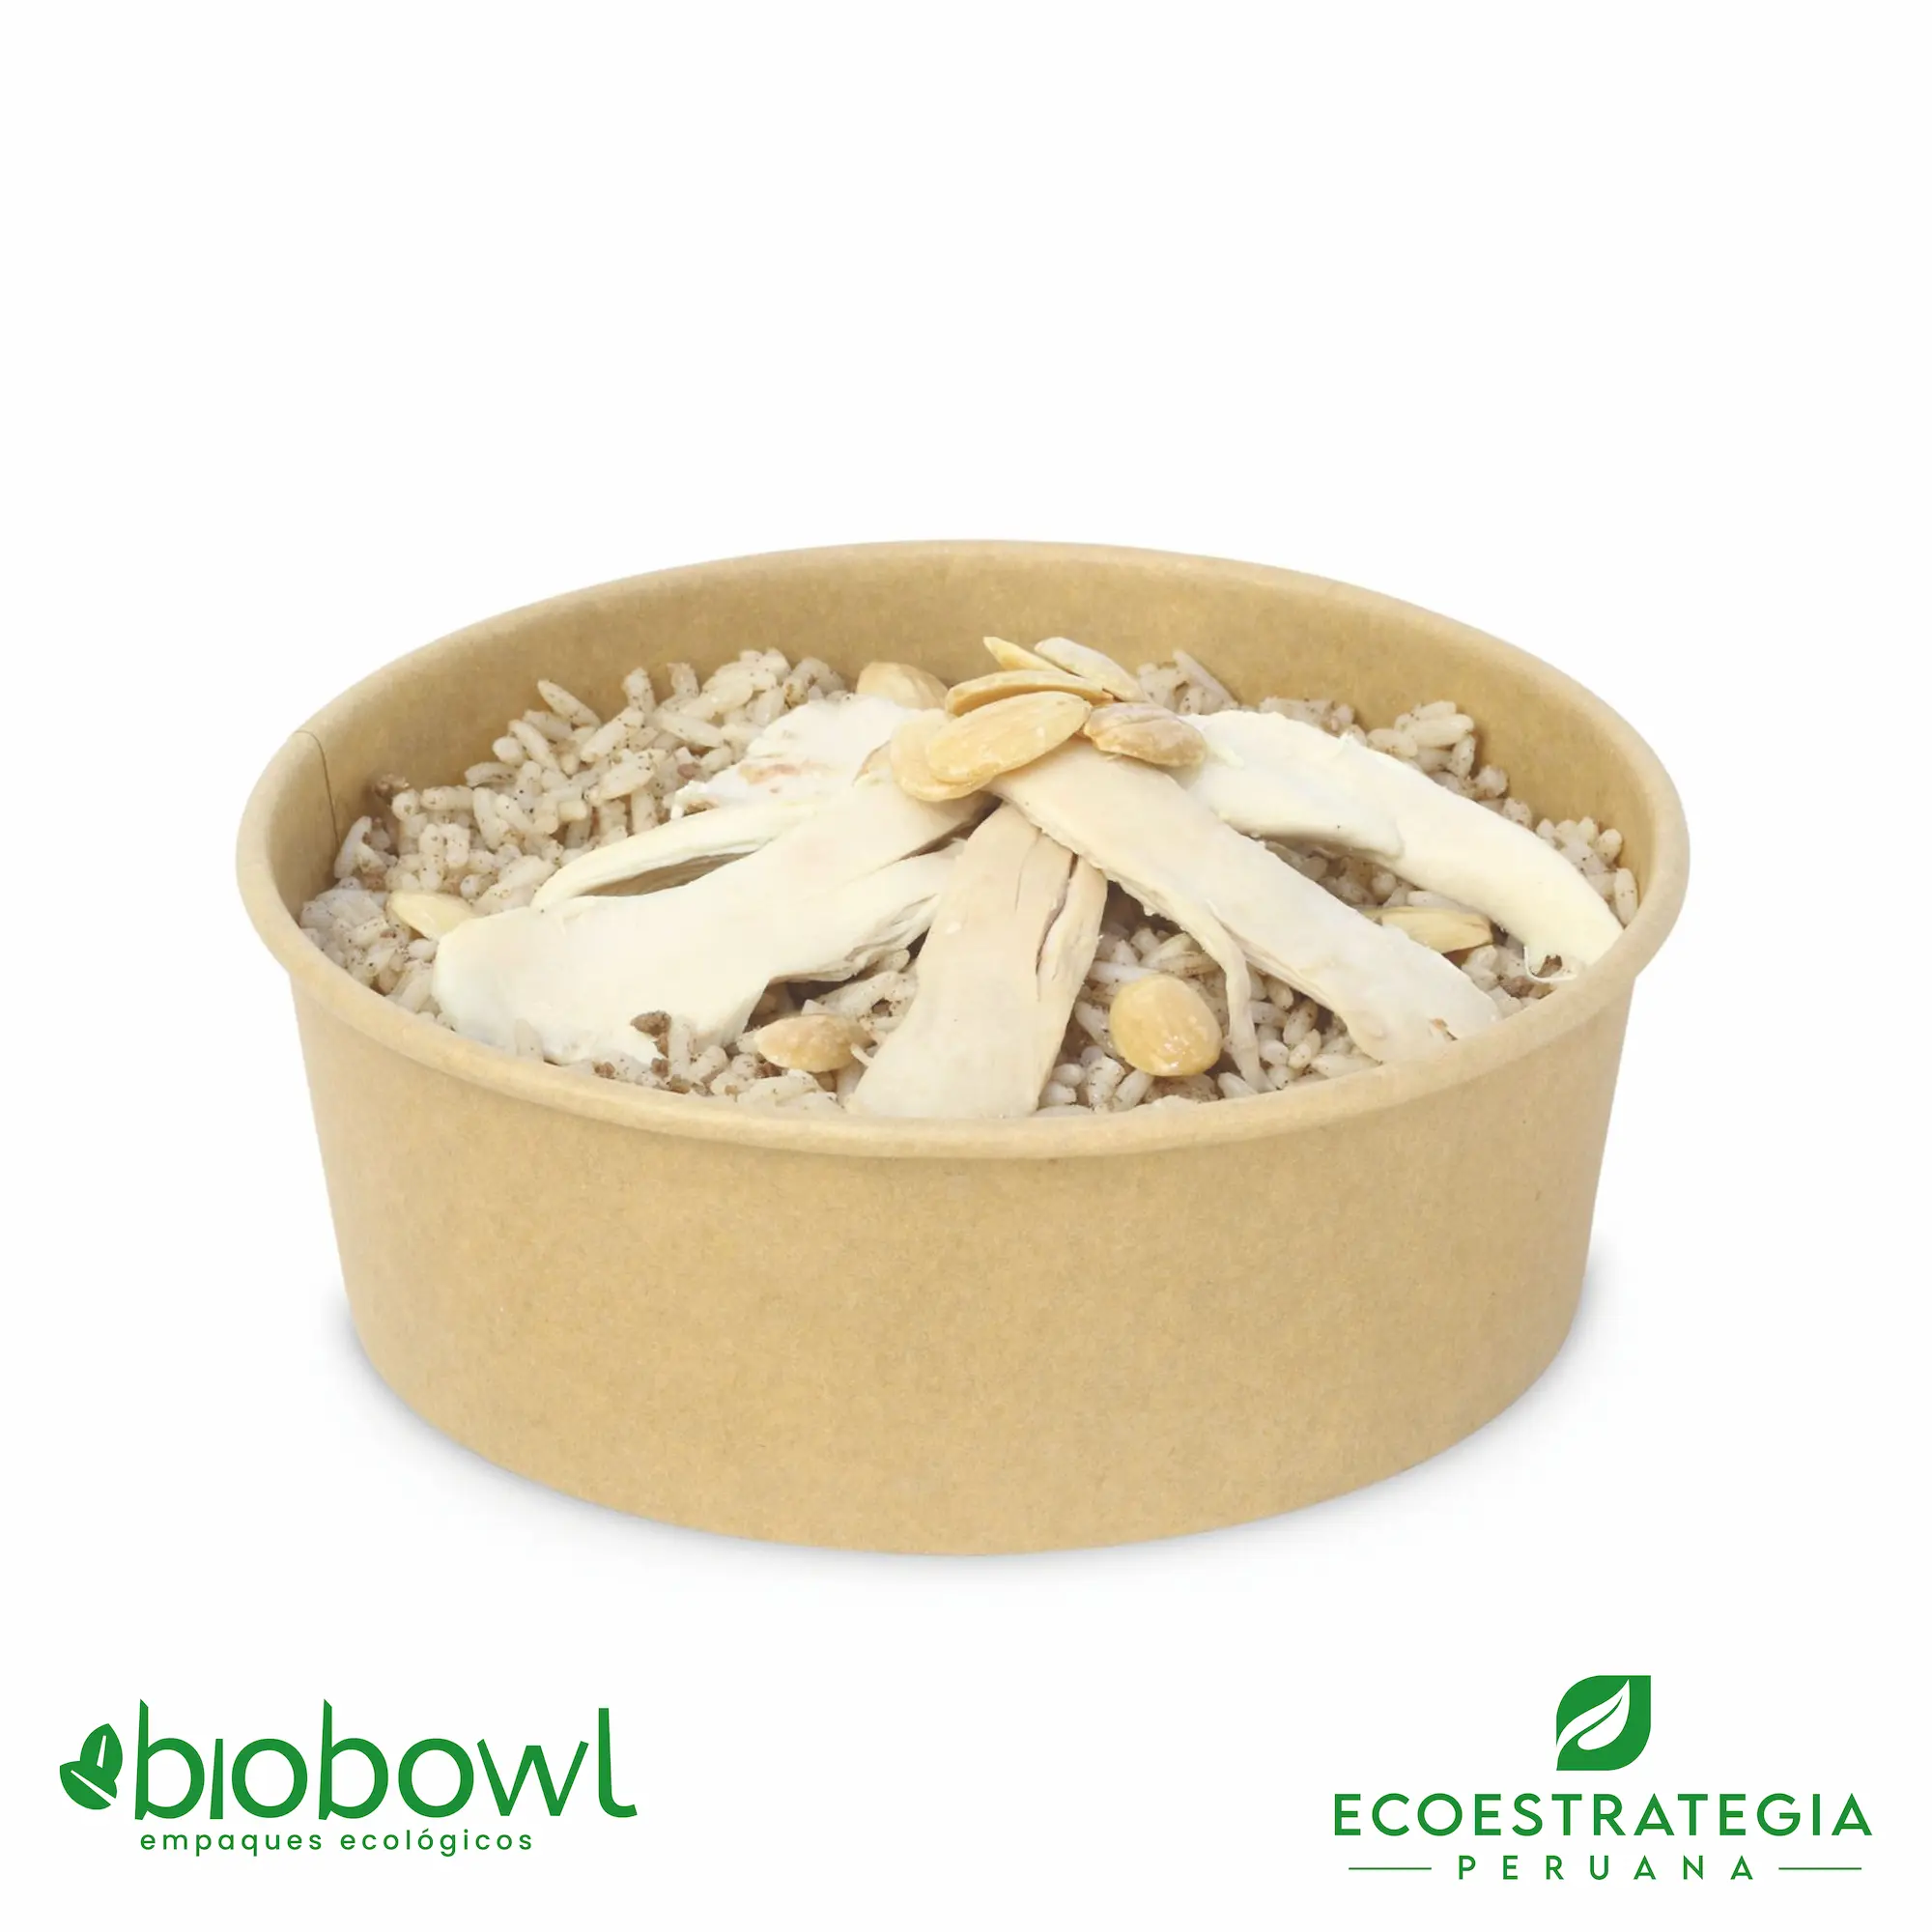 Esta bowl biodegradable de 500 ml es a base de fibra de bambu. Envases descartables con gramaje ideal, cotiza tus empaques, platos y tapers para comidas